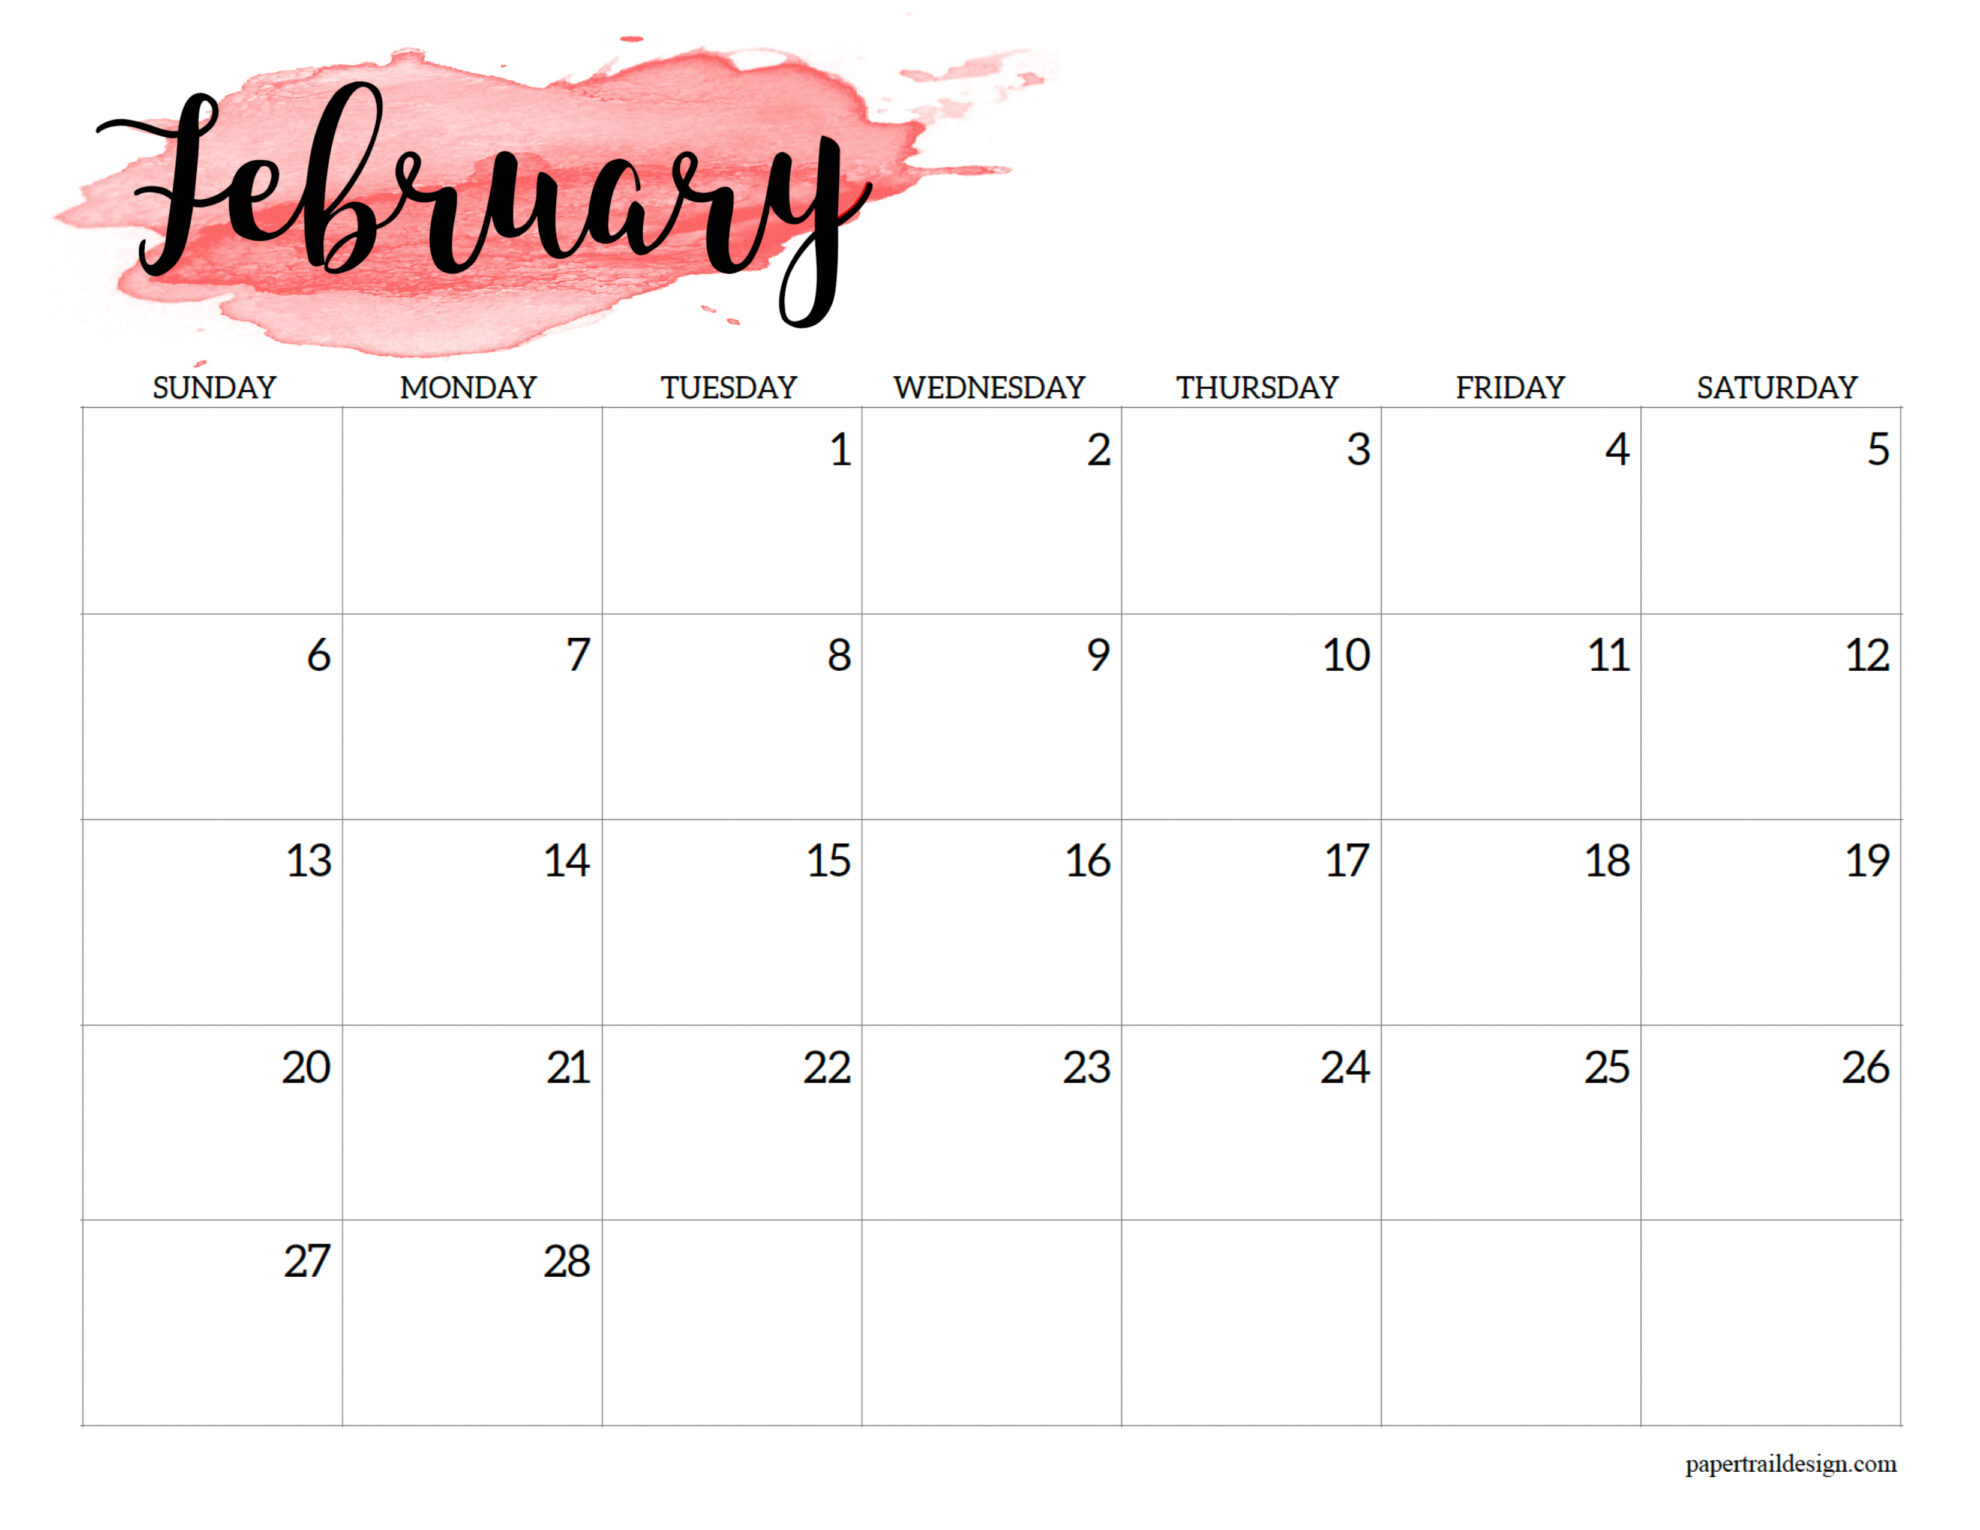 Free Printable February 2022 Calendar 2022 Calendar Printable - Watercolor - Paper Trail Design